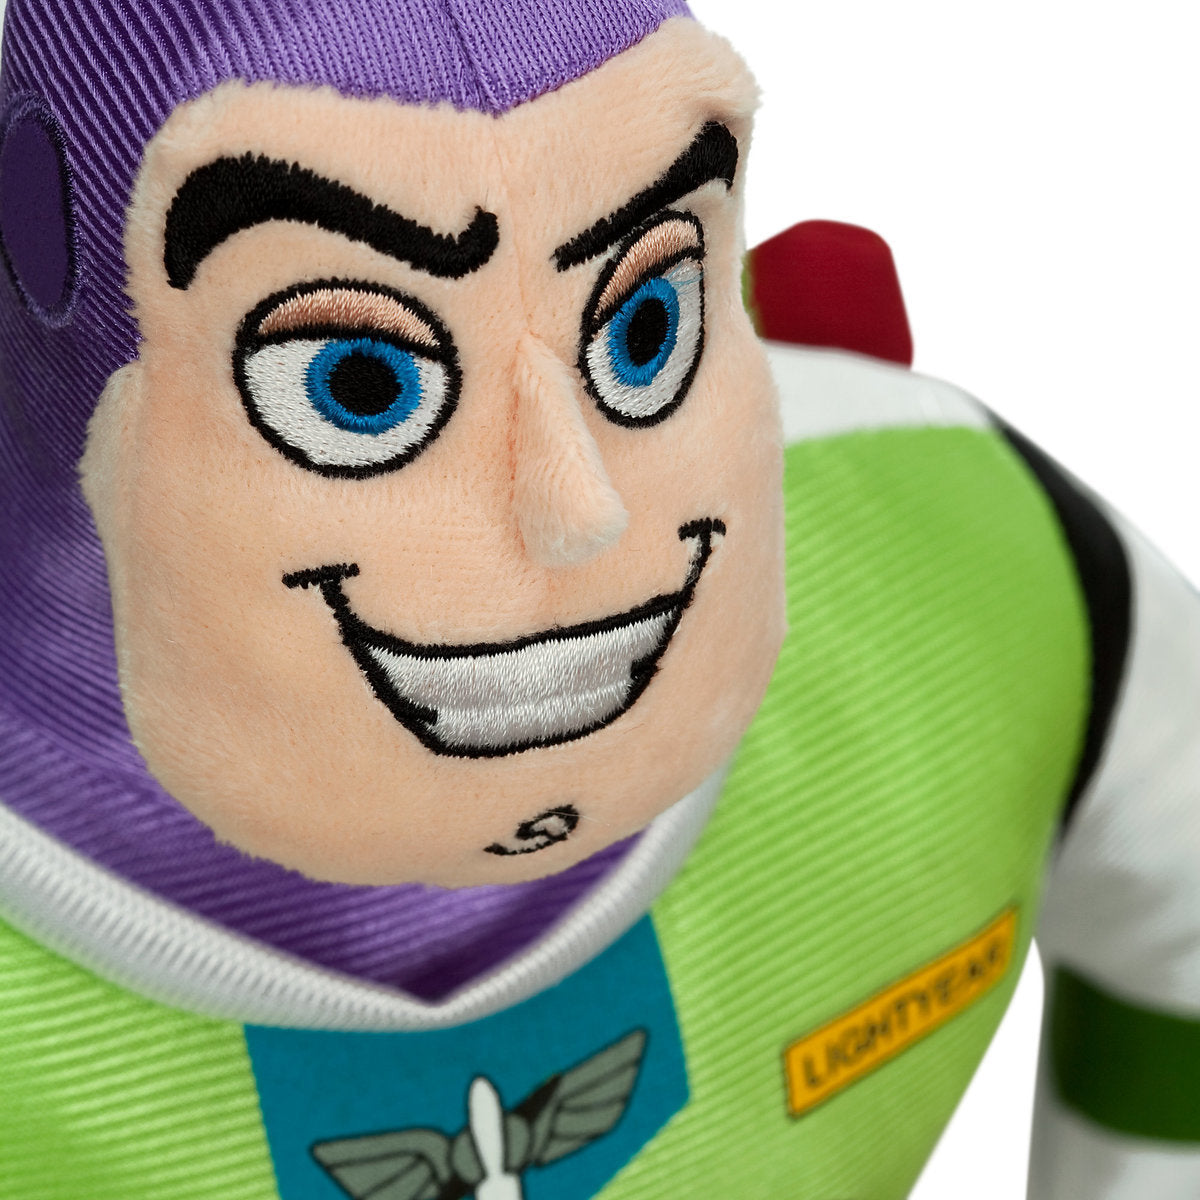 Disney Store Buzz Lightyear Plush Toy Story Medium 17' New With Tags